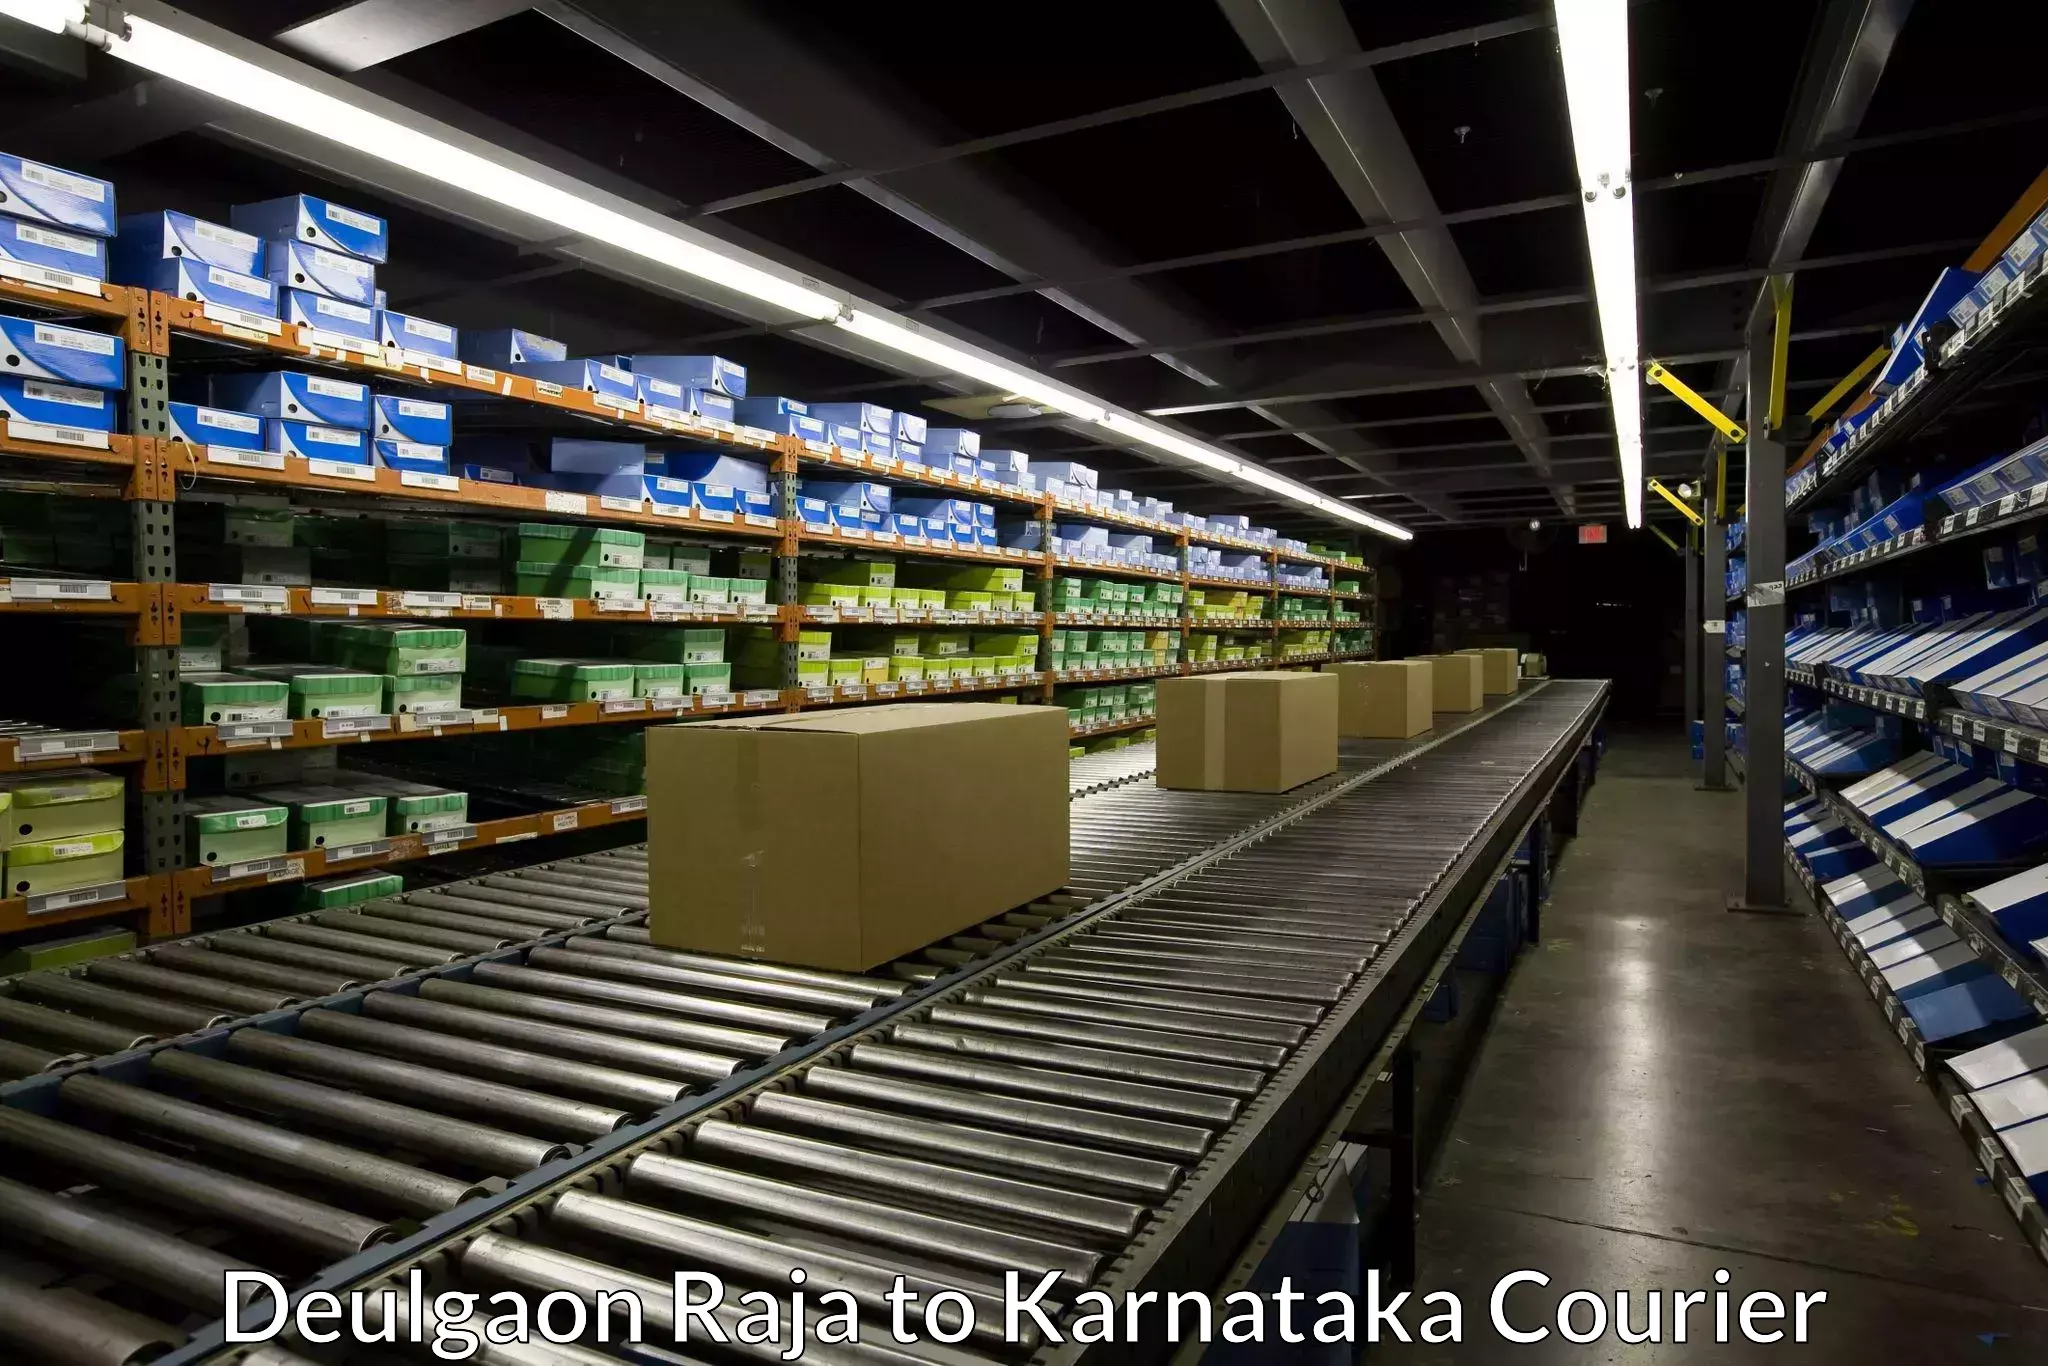 Cost-effective freight solutions Deulgaon Raja to Karnataka